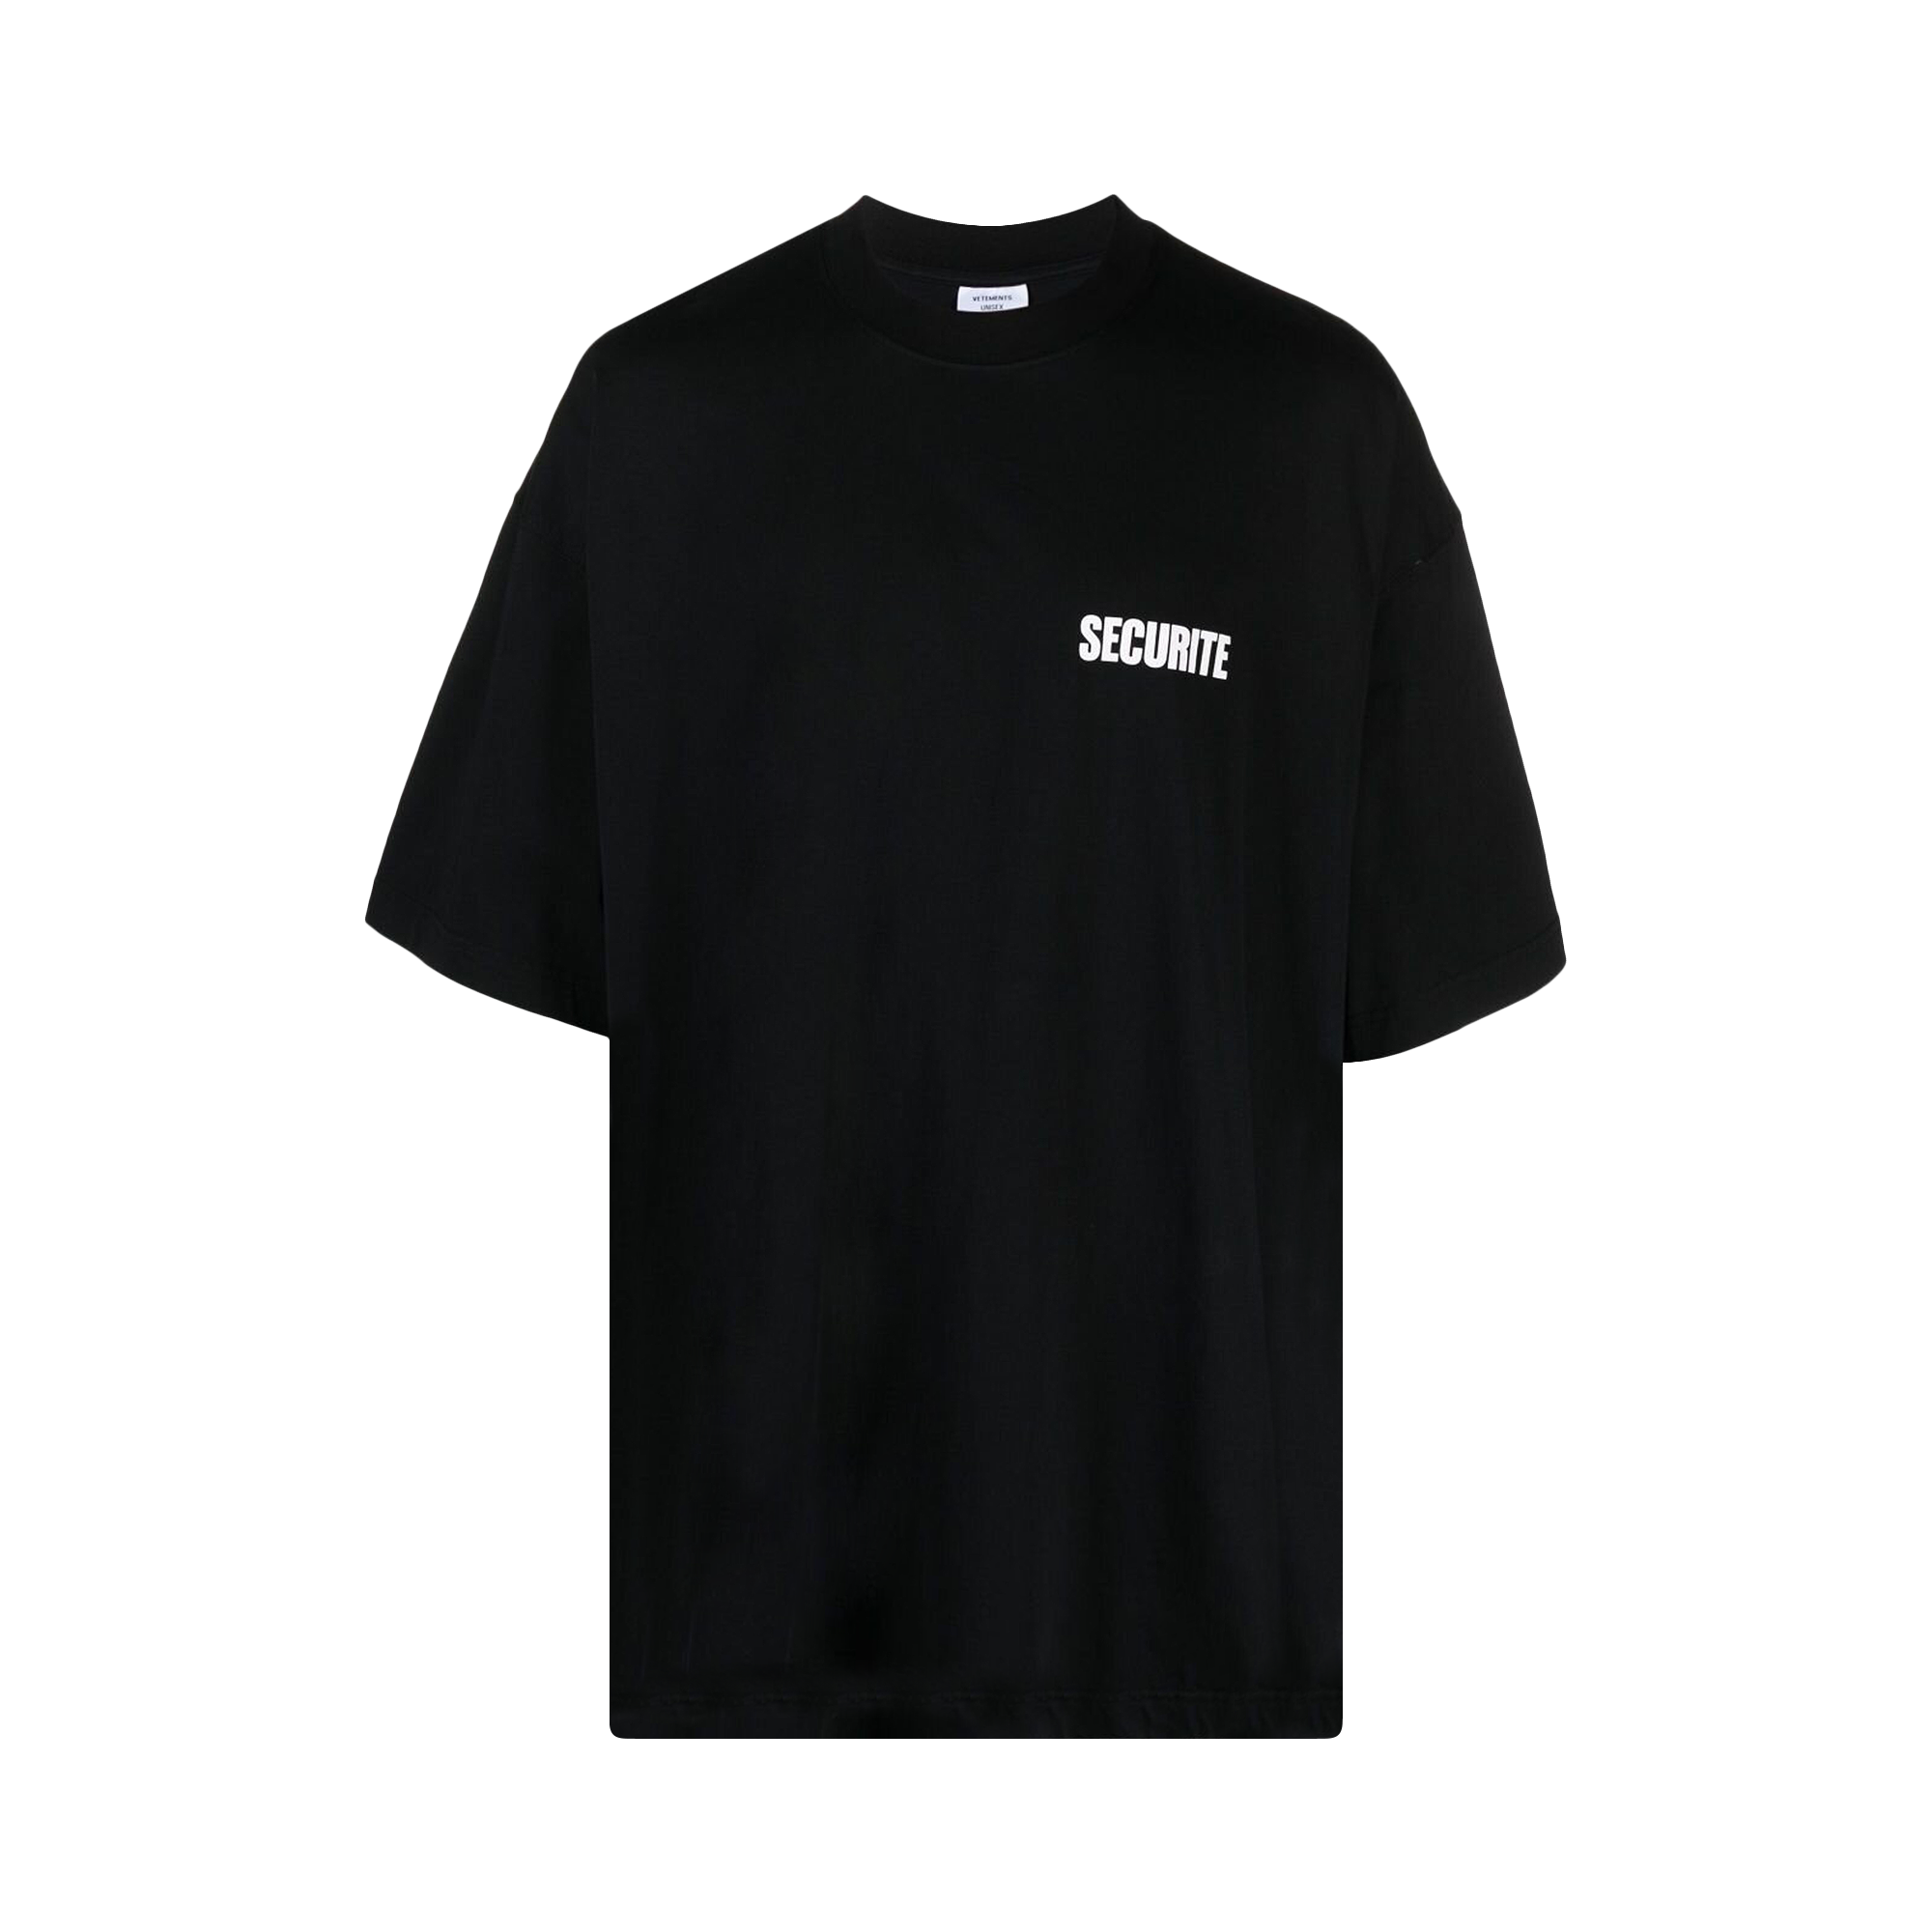 Pre-owned Vetements Securite T-shirt 'black'